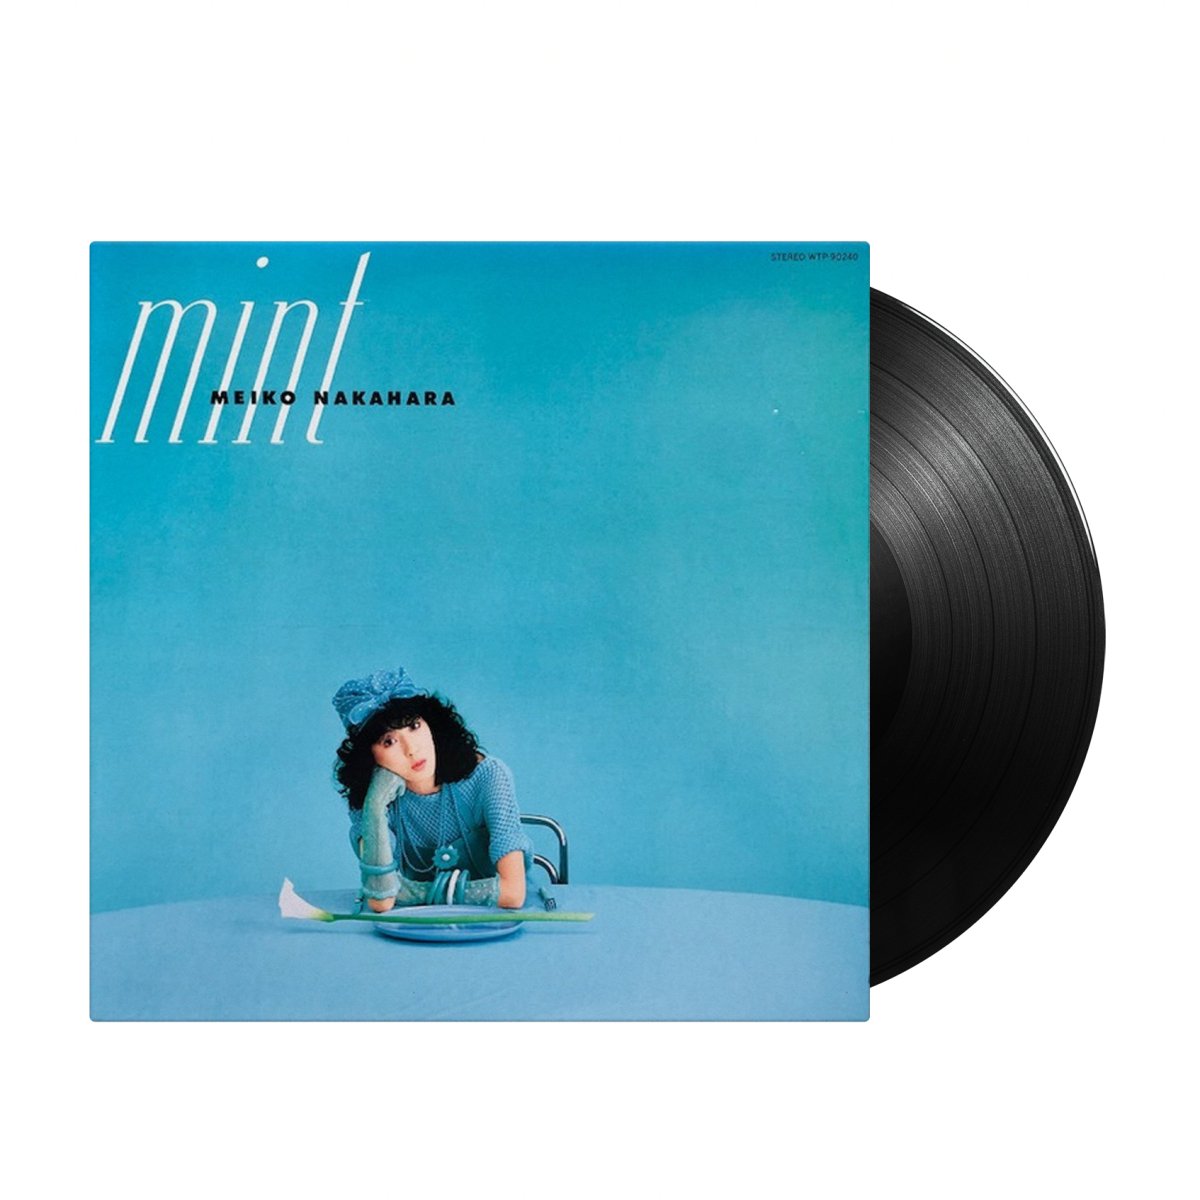 Meiko Nakahara - Mint (Japan Import) - Inner Ocean Records